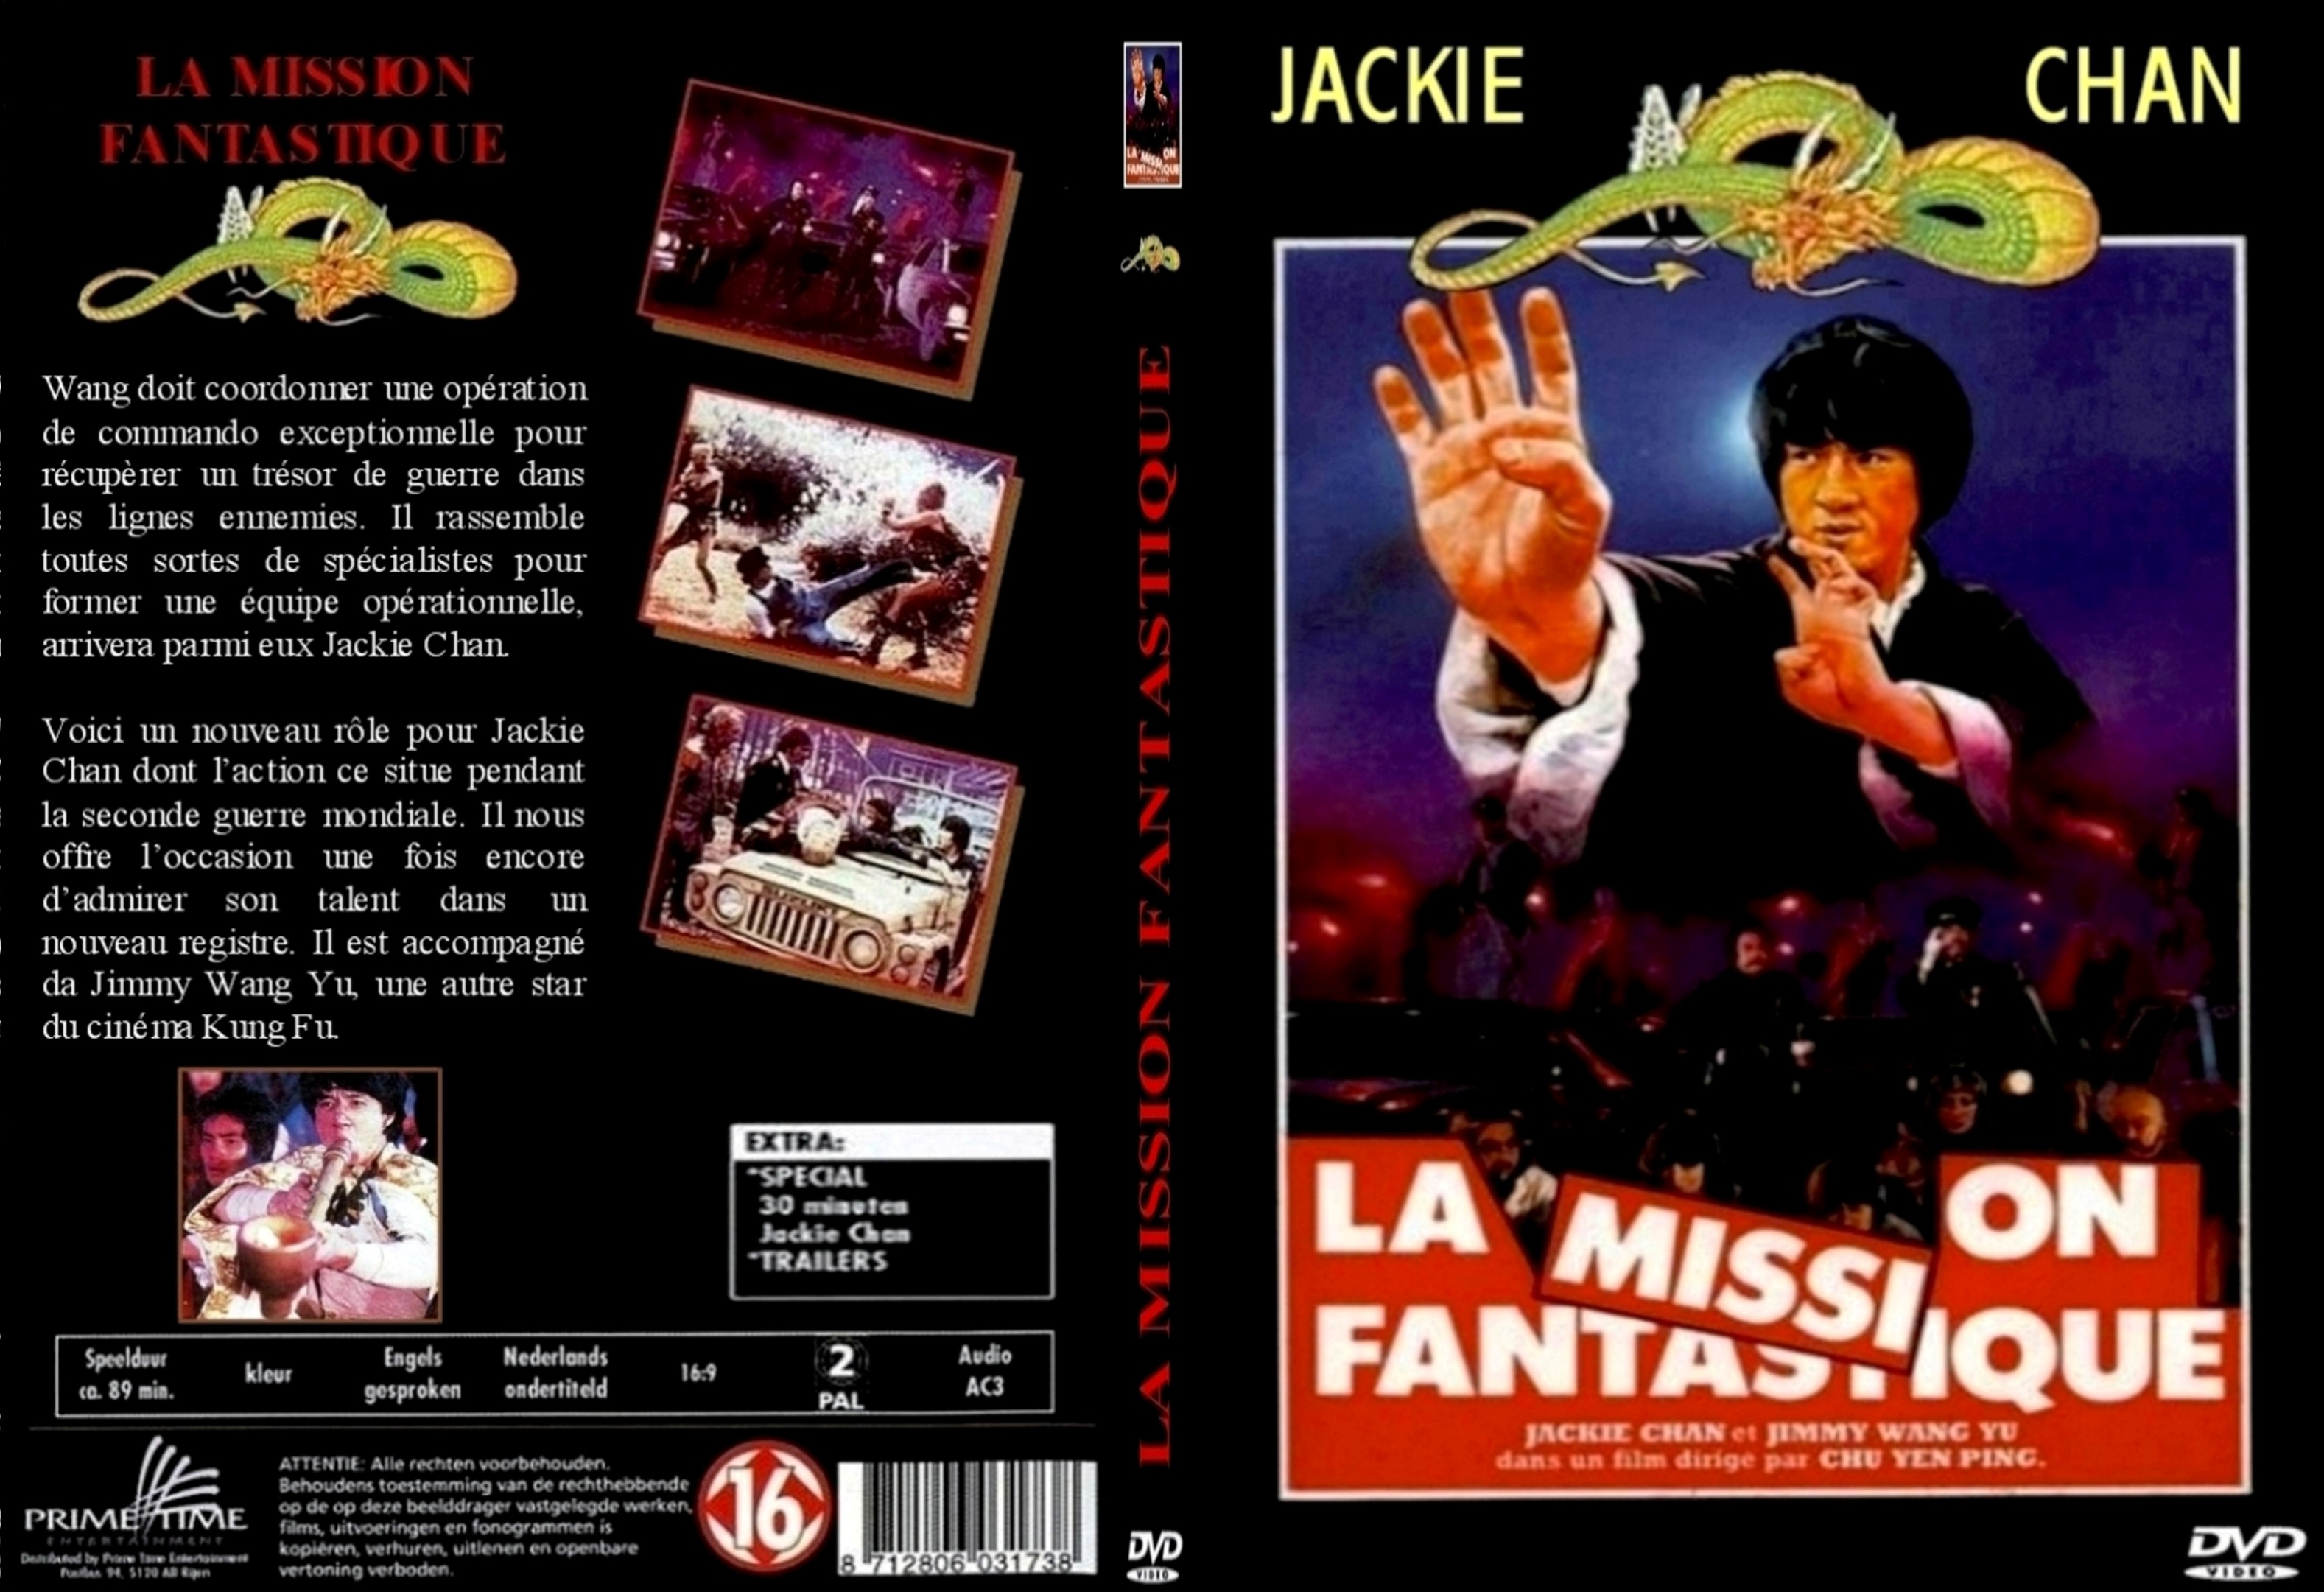 Jaquette DVD La mission fantastique custom - SLIM